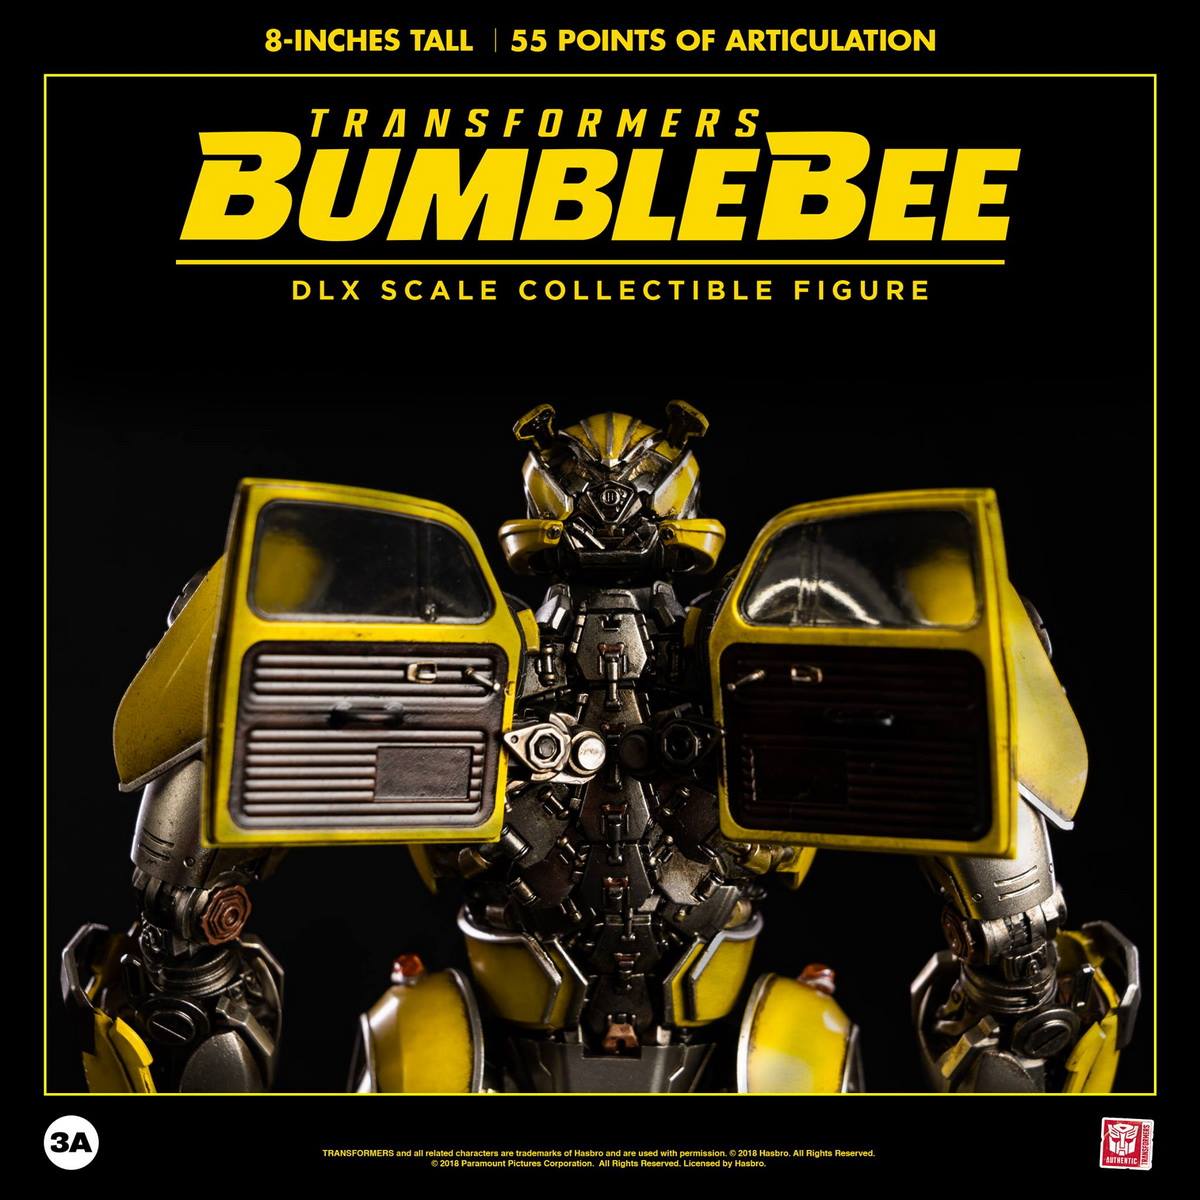 Pedido Figura DLX Bumblebee - Transformers: Bumblebee Movie marca Hasbro x Threezero 3Z0242 (20.3 cm)